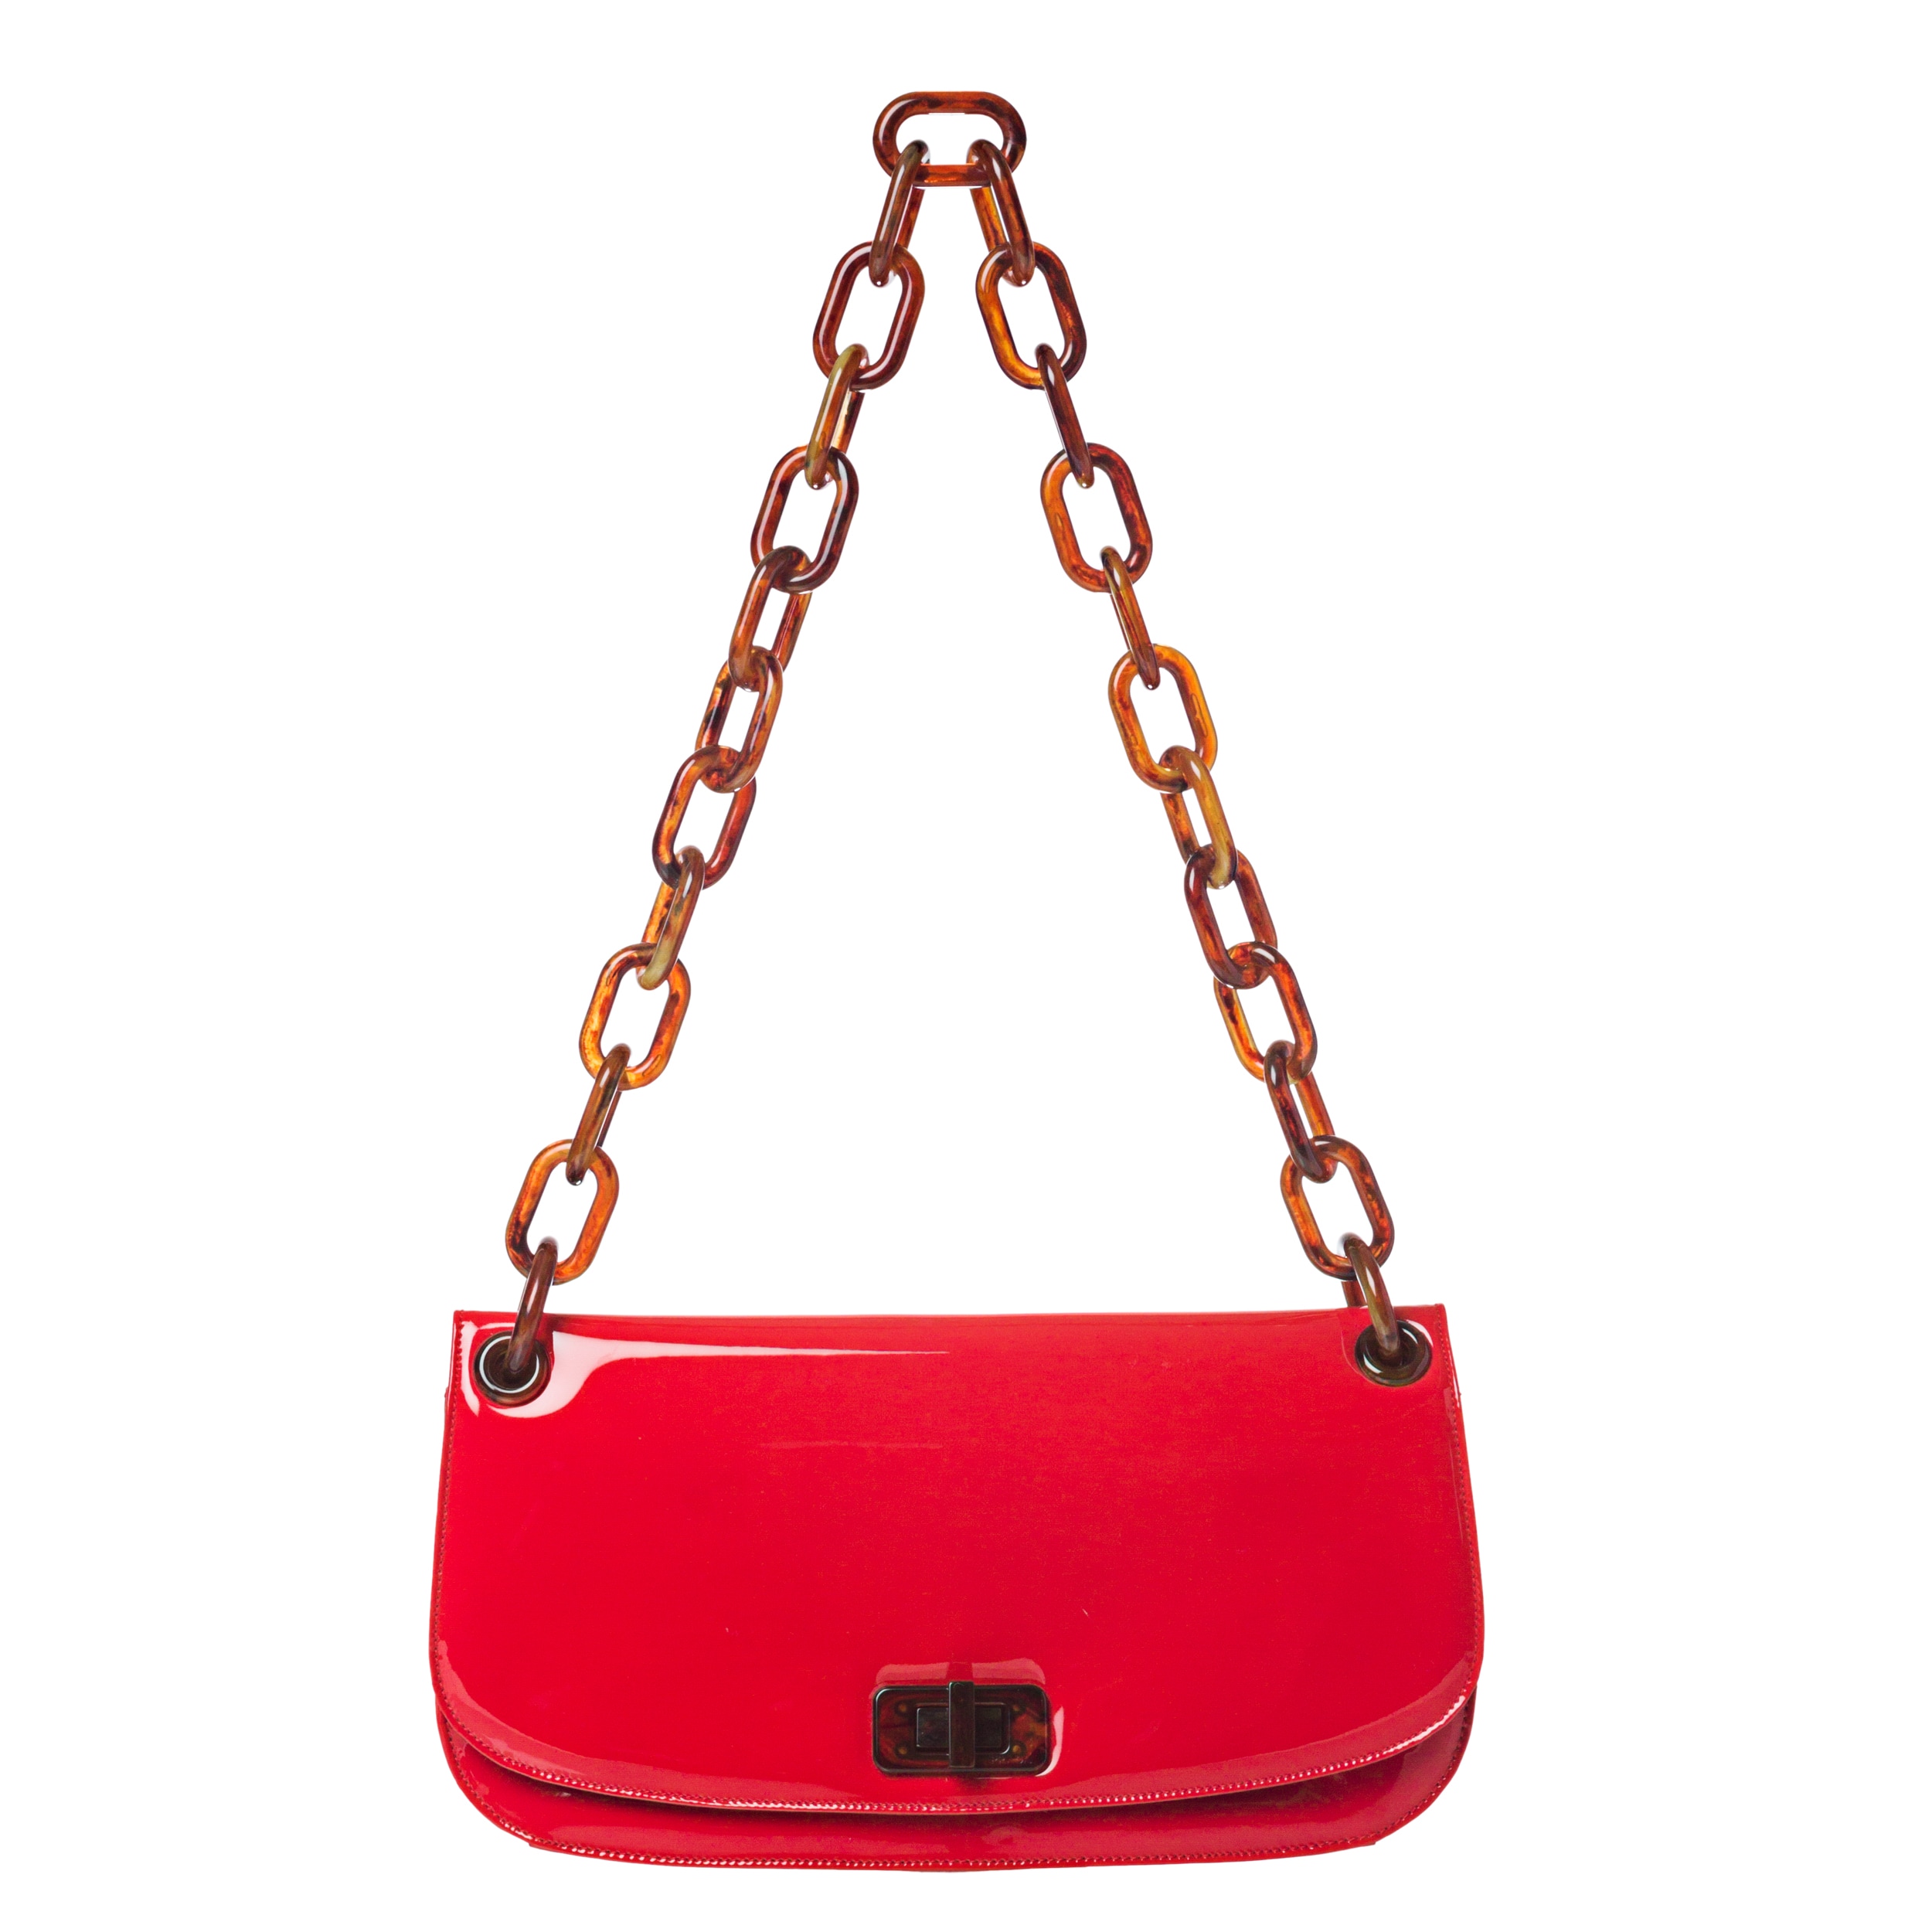 Prada \u0026#39;Madras\u0026#39; Red Patent Leather Shoulder Bag - 14294591 ...  